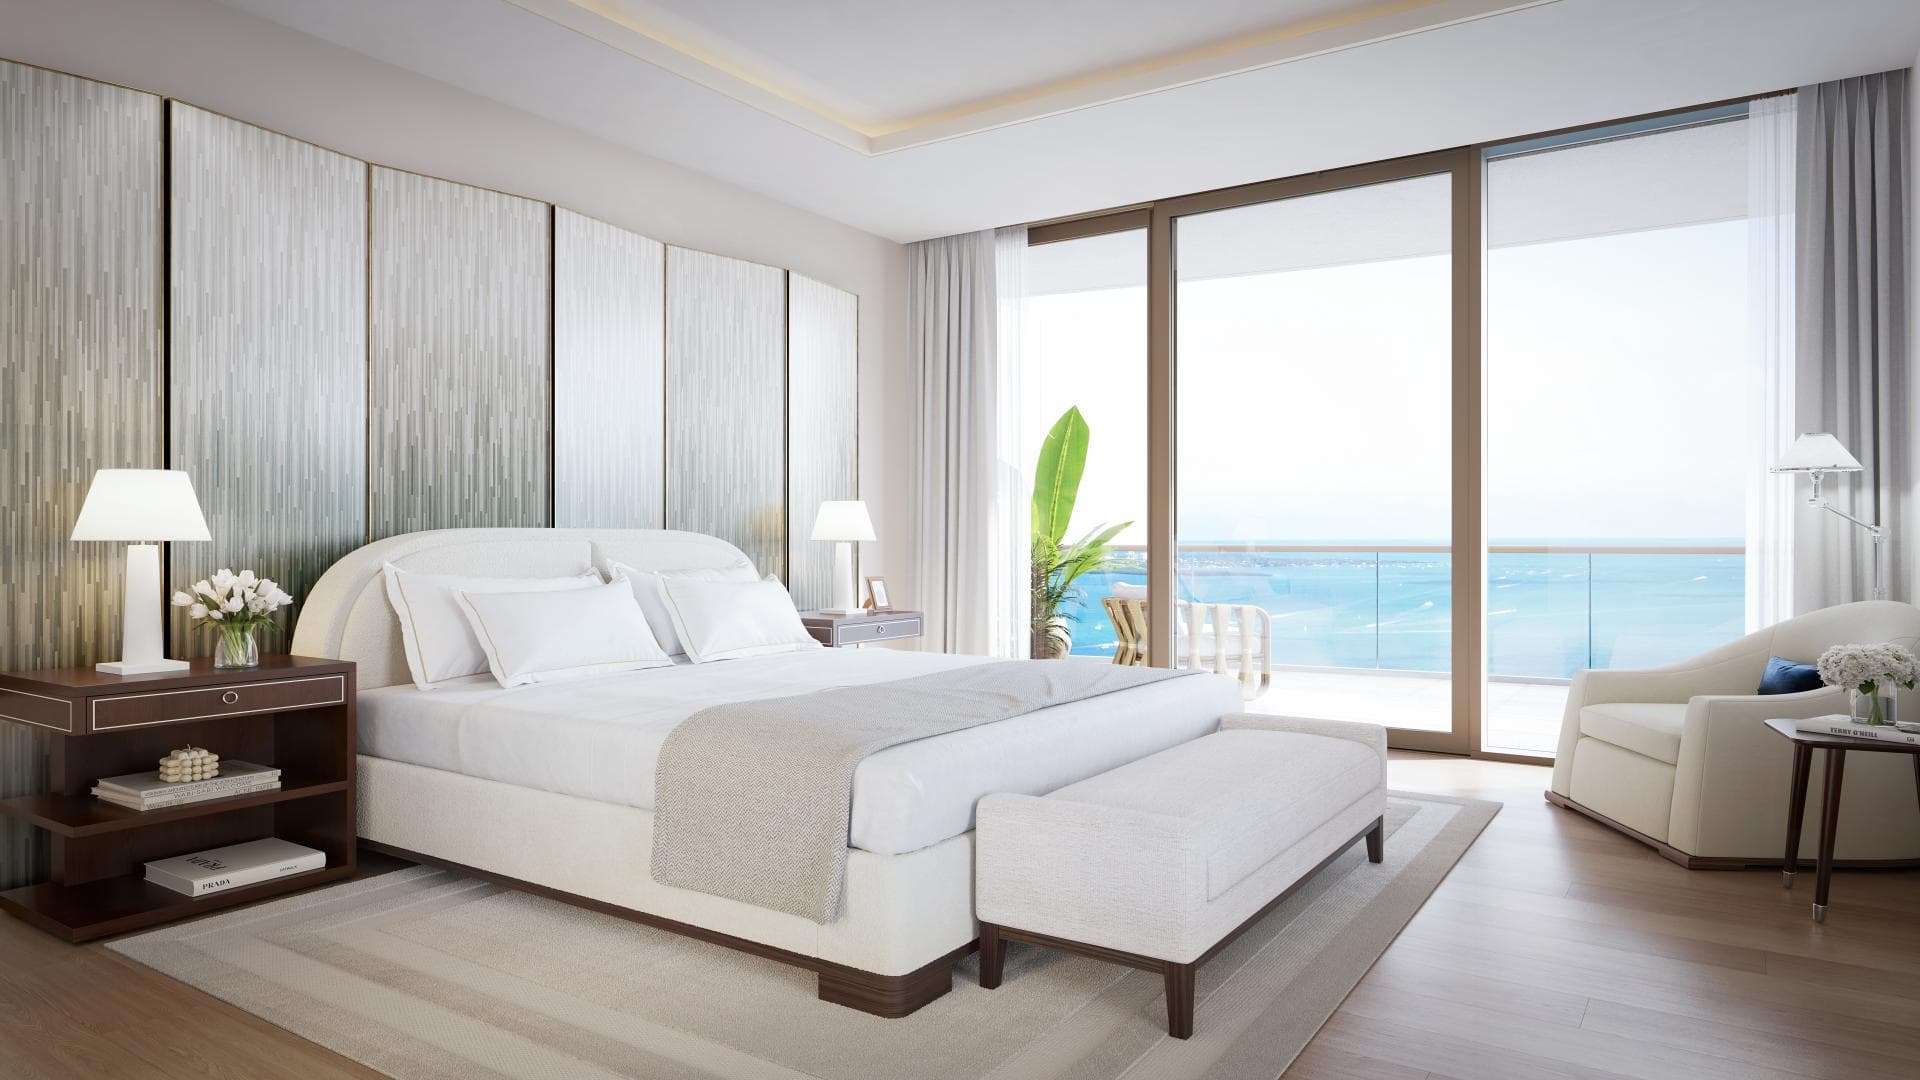  Bedroom Apartment For Sale Miami Lp21194 5d66c56c7192a80.jpg